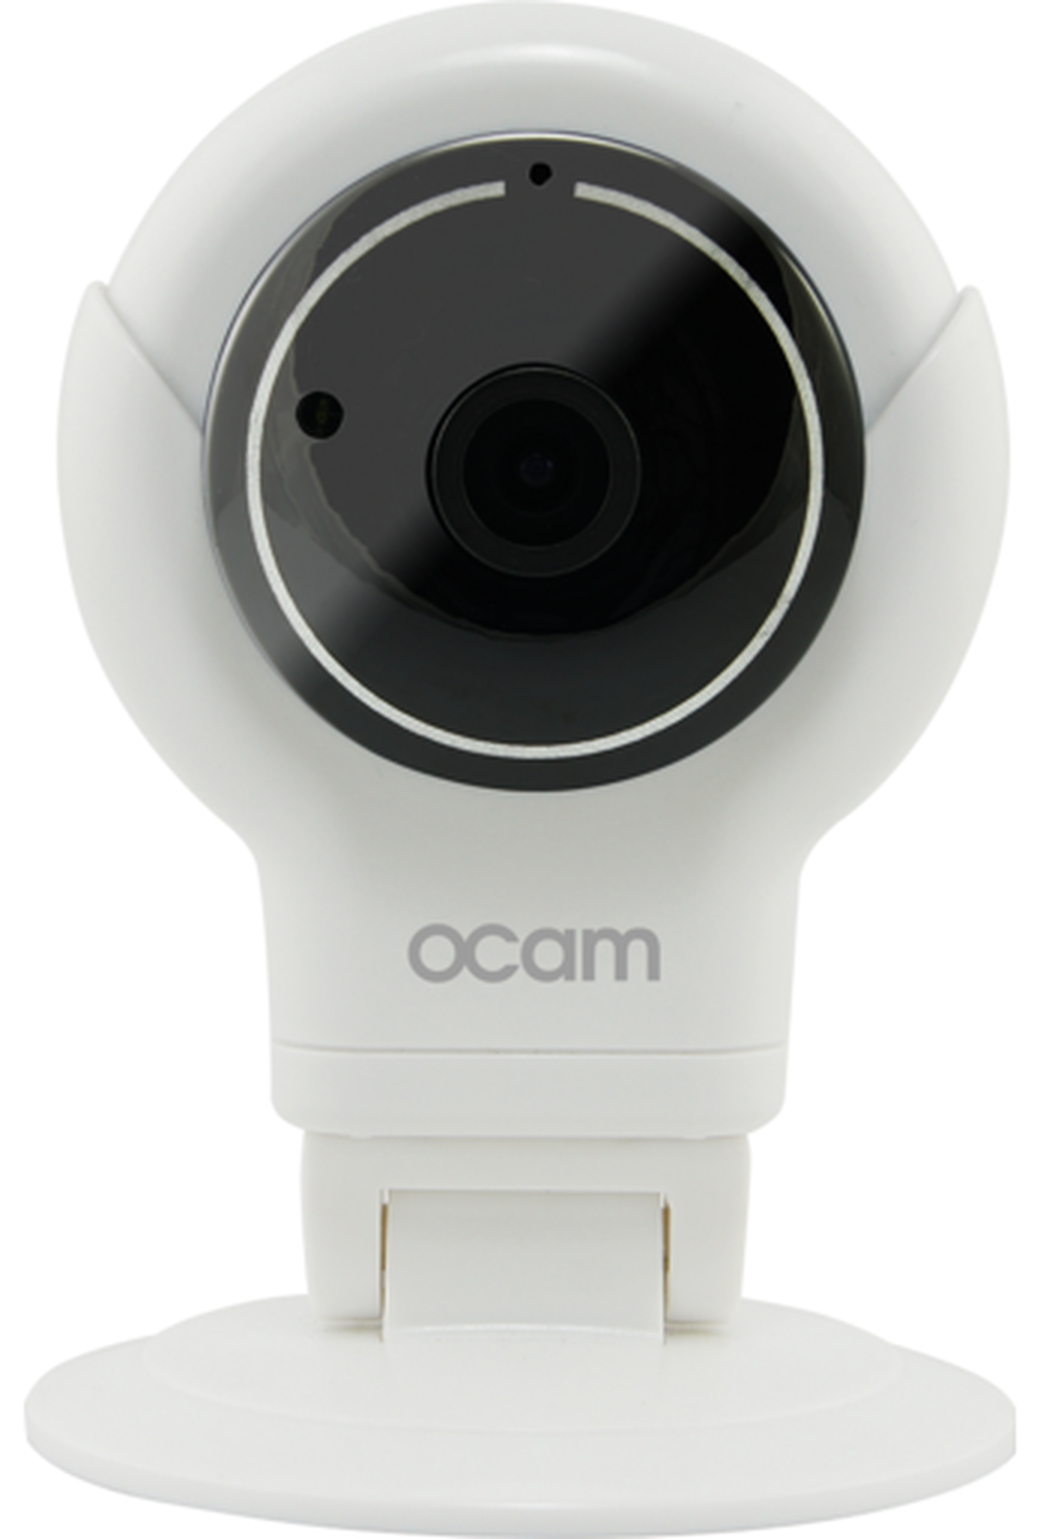 IP-камера OCAM-S1-White фото